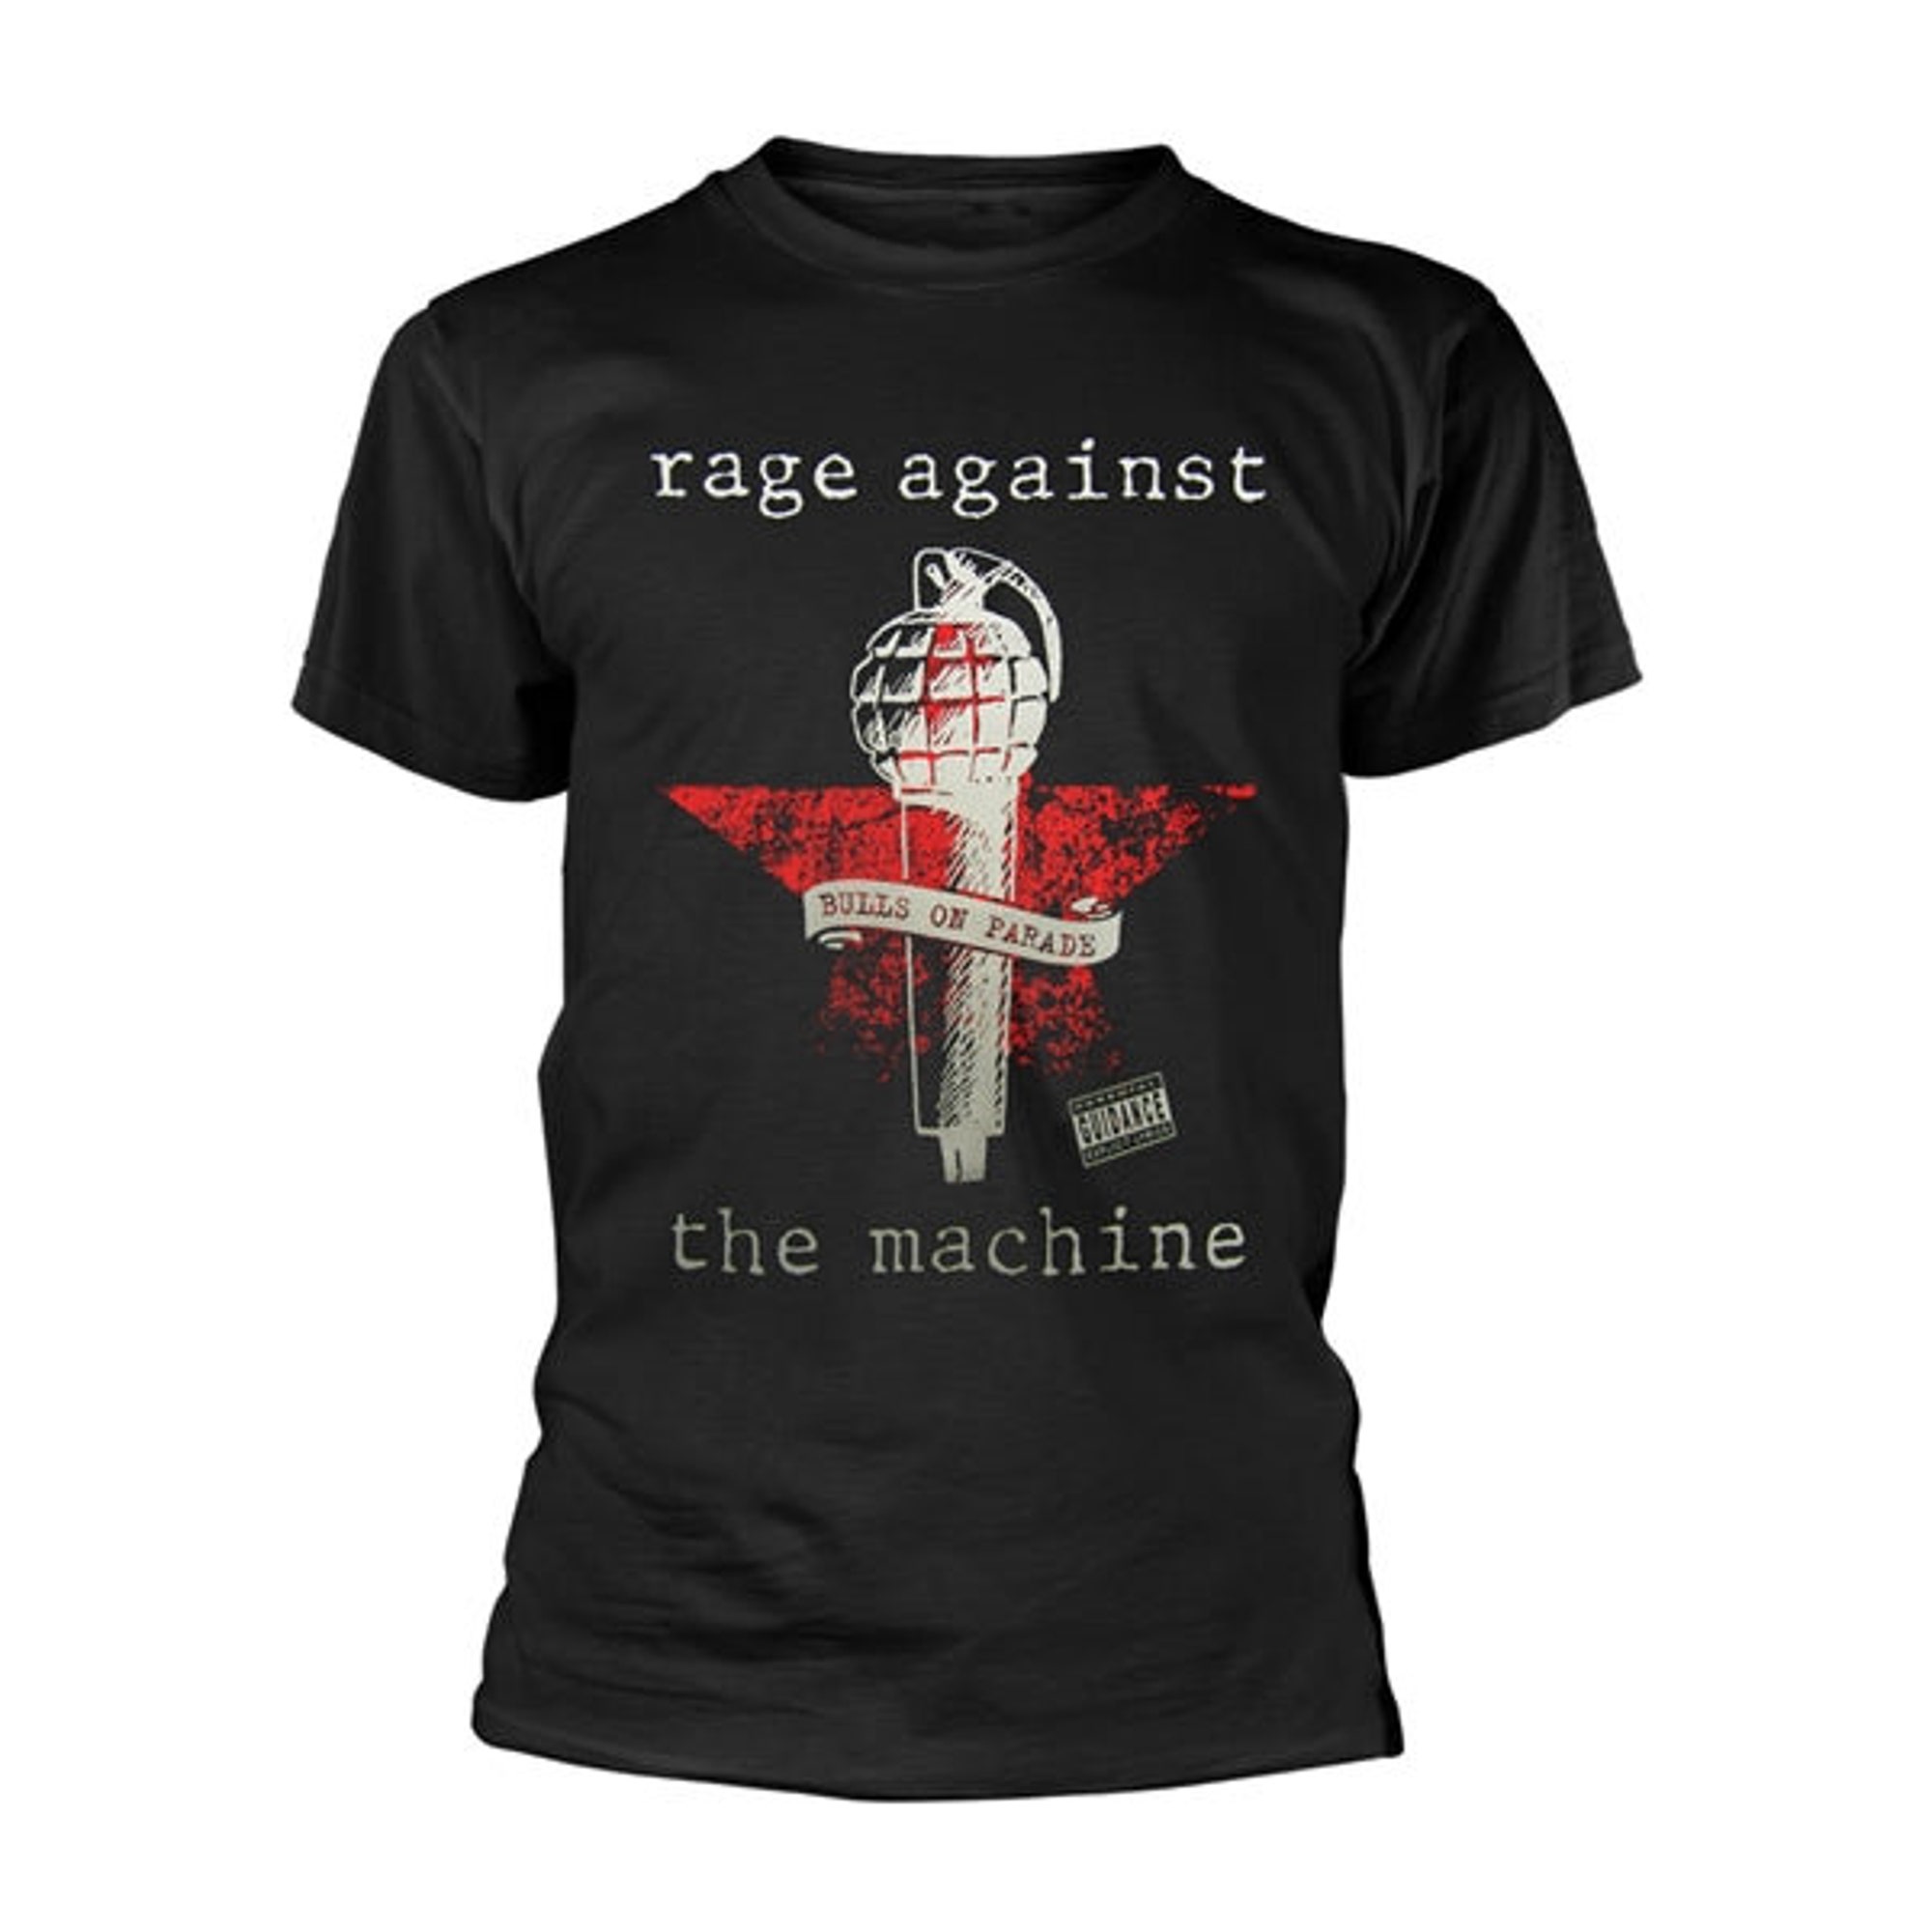 Rage Against T-Shirt - Bulls On Parade Mic